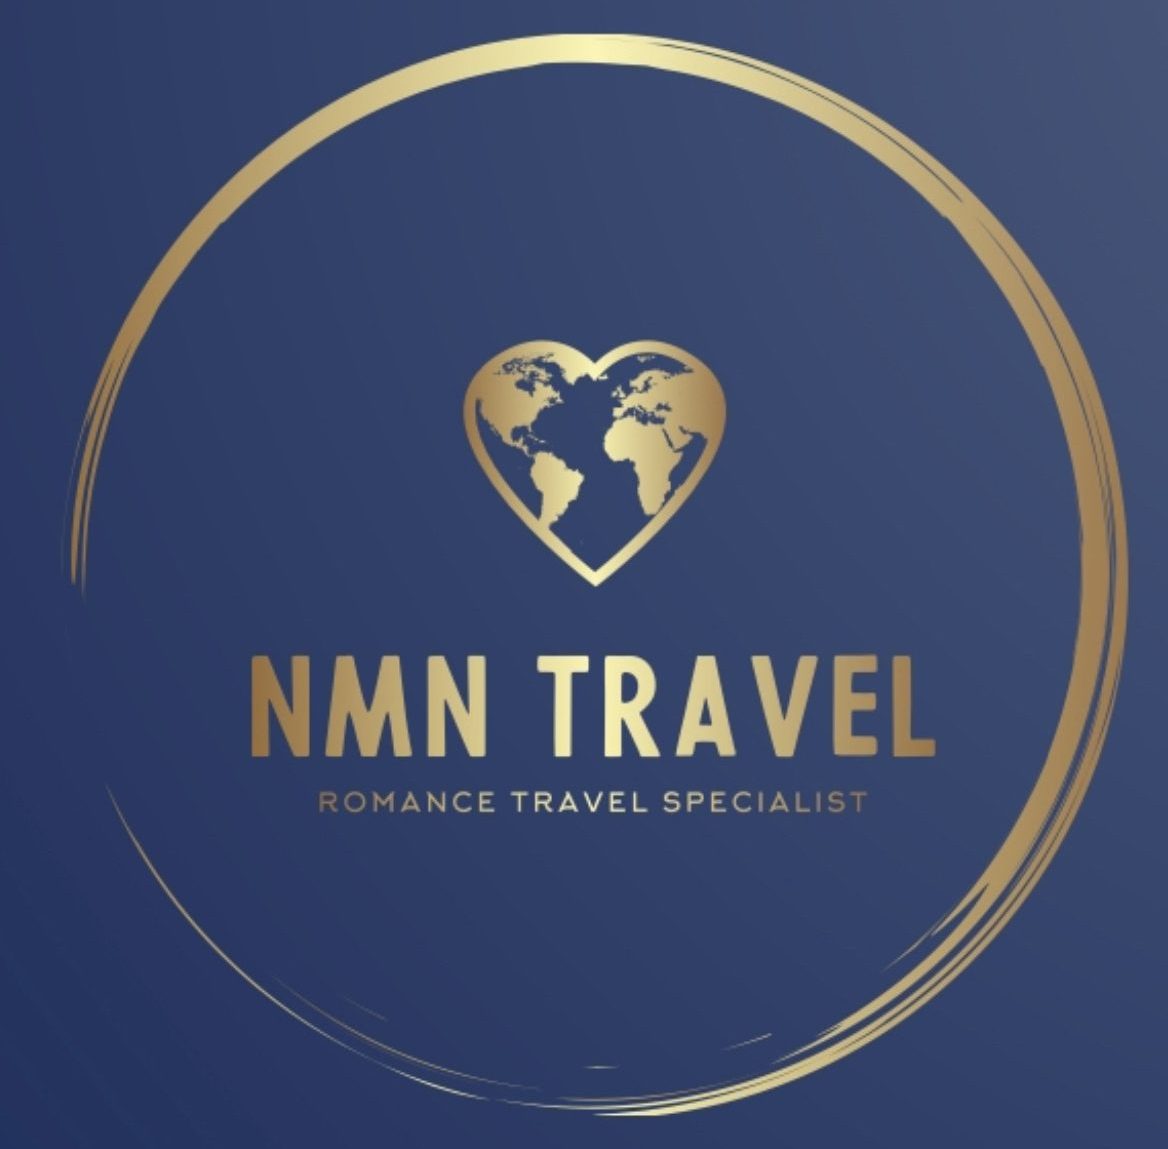 NMN Travel – Romance Travel Specialist